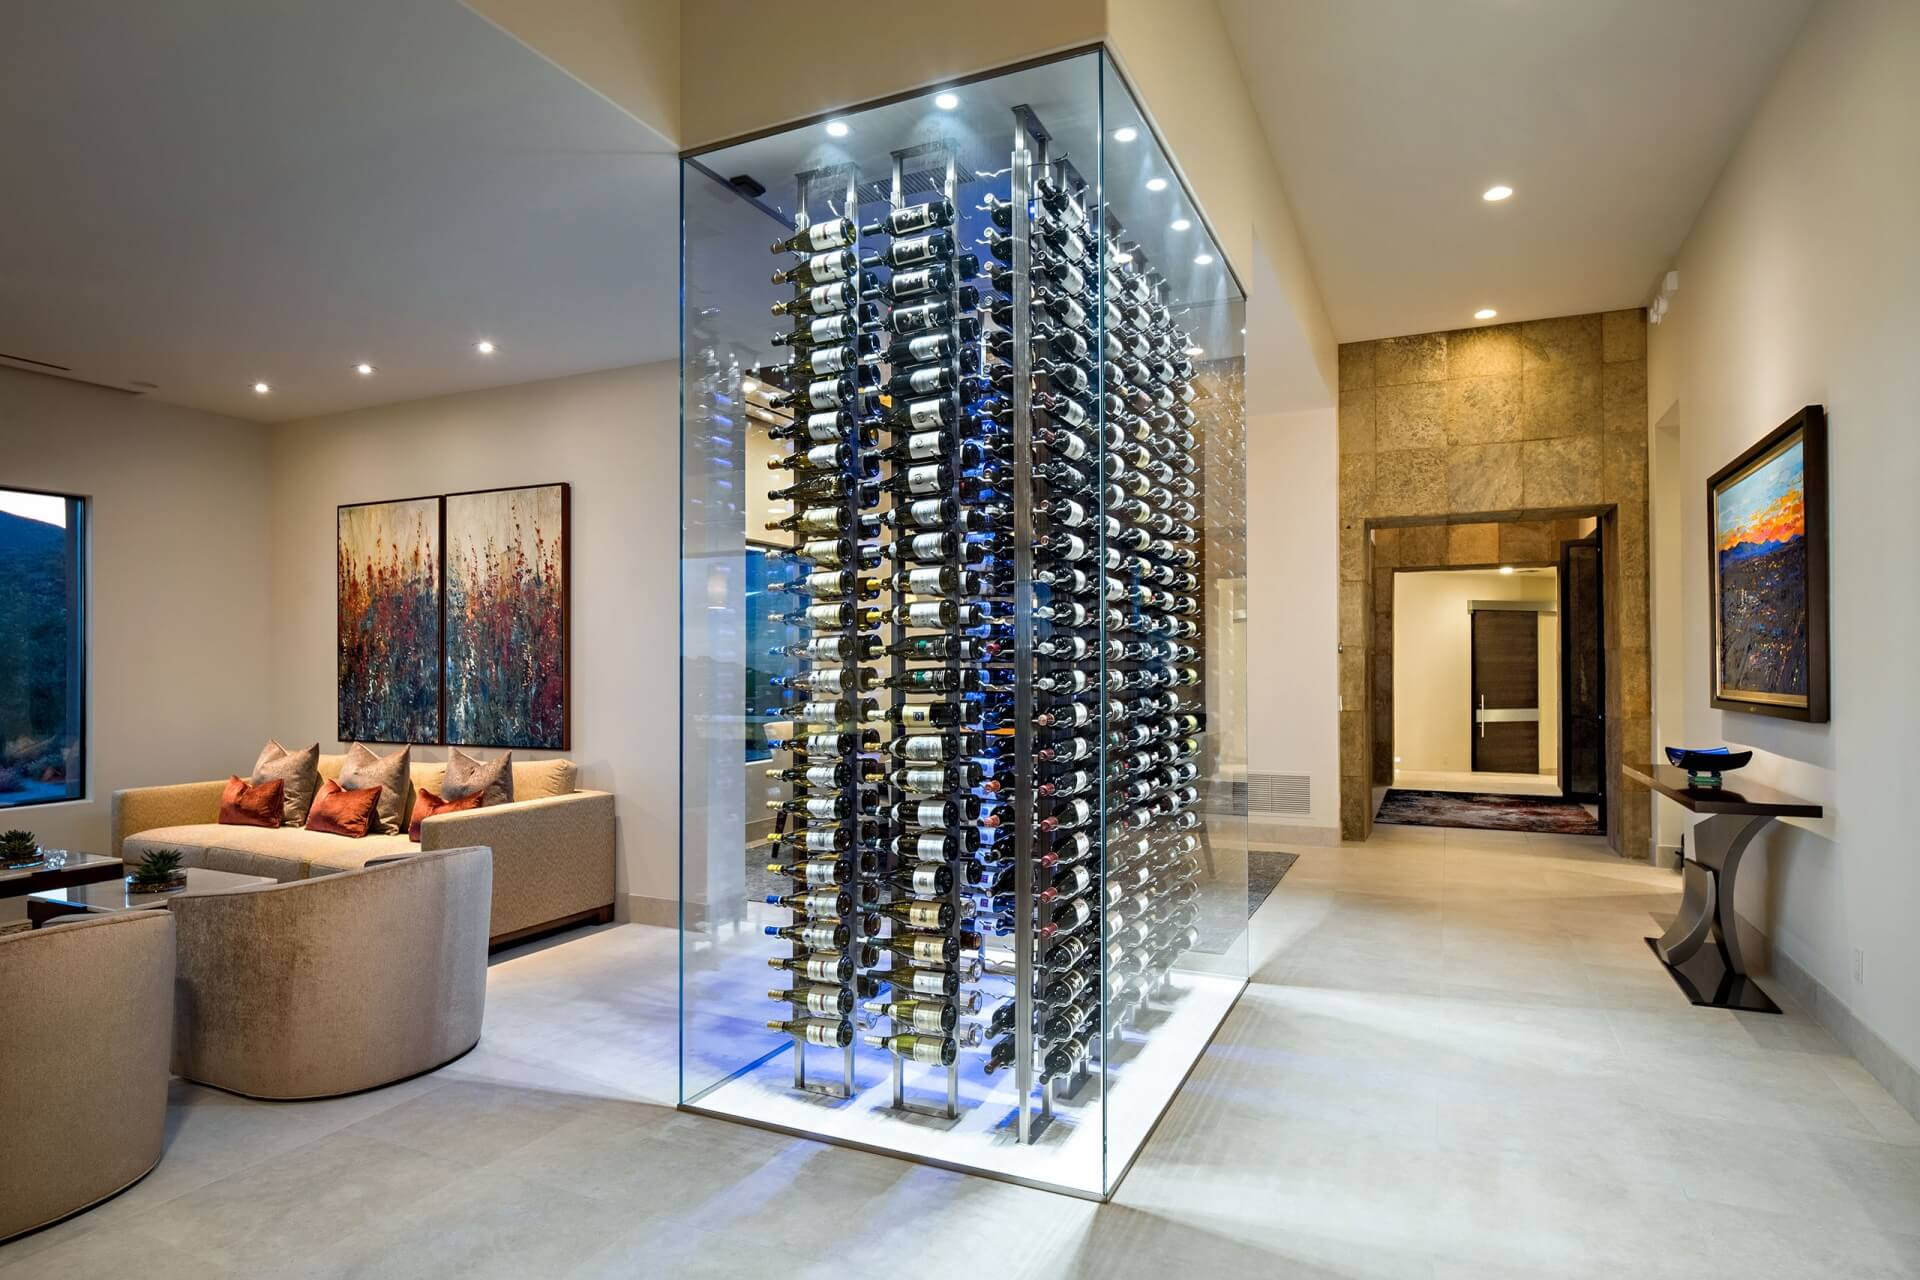 Best ideas about Wine Cellar Design
. Save or Pin Modern Wine Cellars Now.